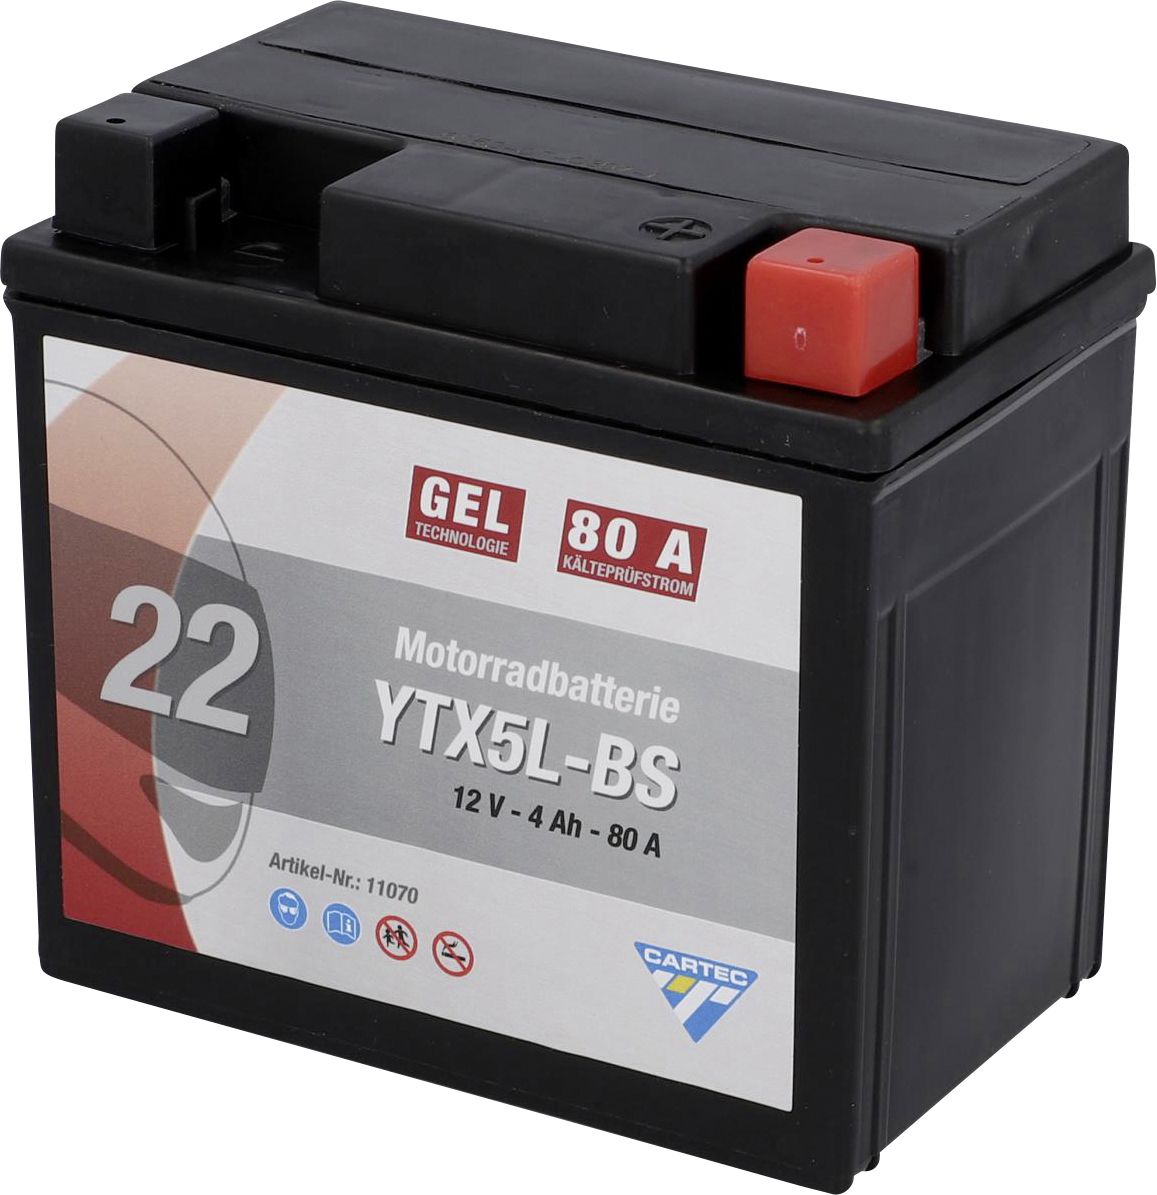 Cartec Gel Motorradbatterie YTX5L-BS 4Ah 80A GLO680456081